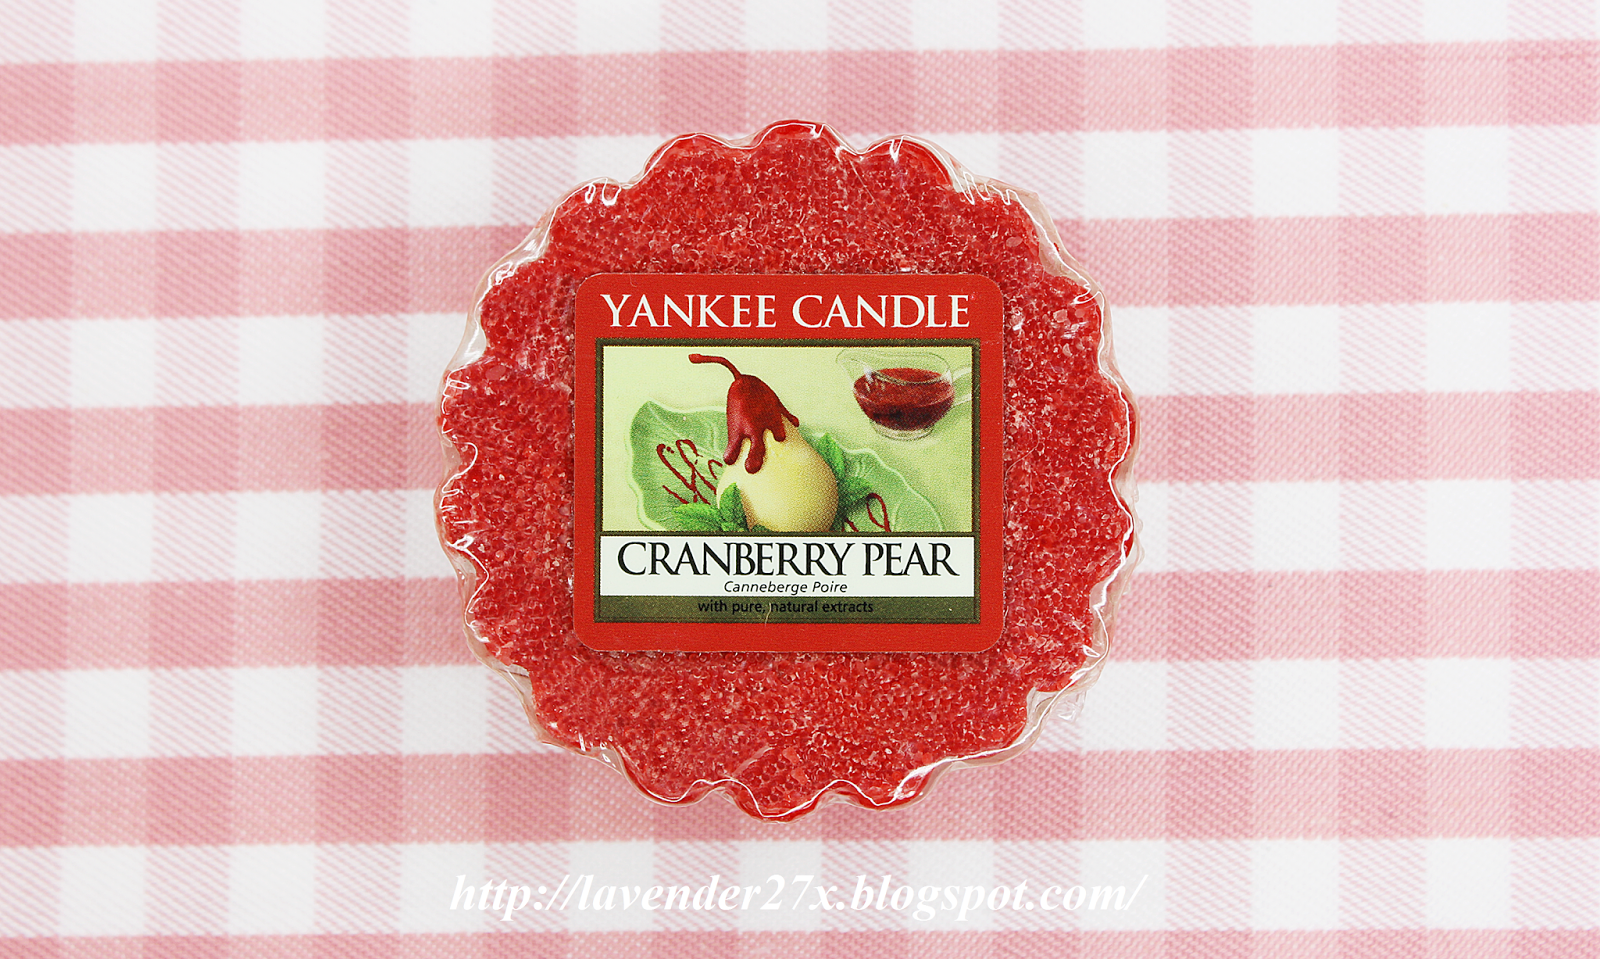 http://lavender27x.blogspot.com/2014/12/pachnido-yankee-candle-cranberry-pear.html